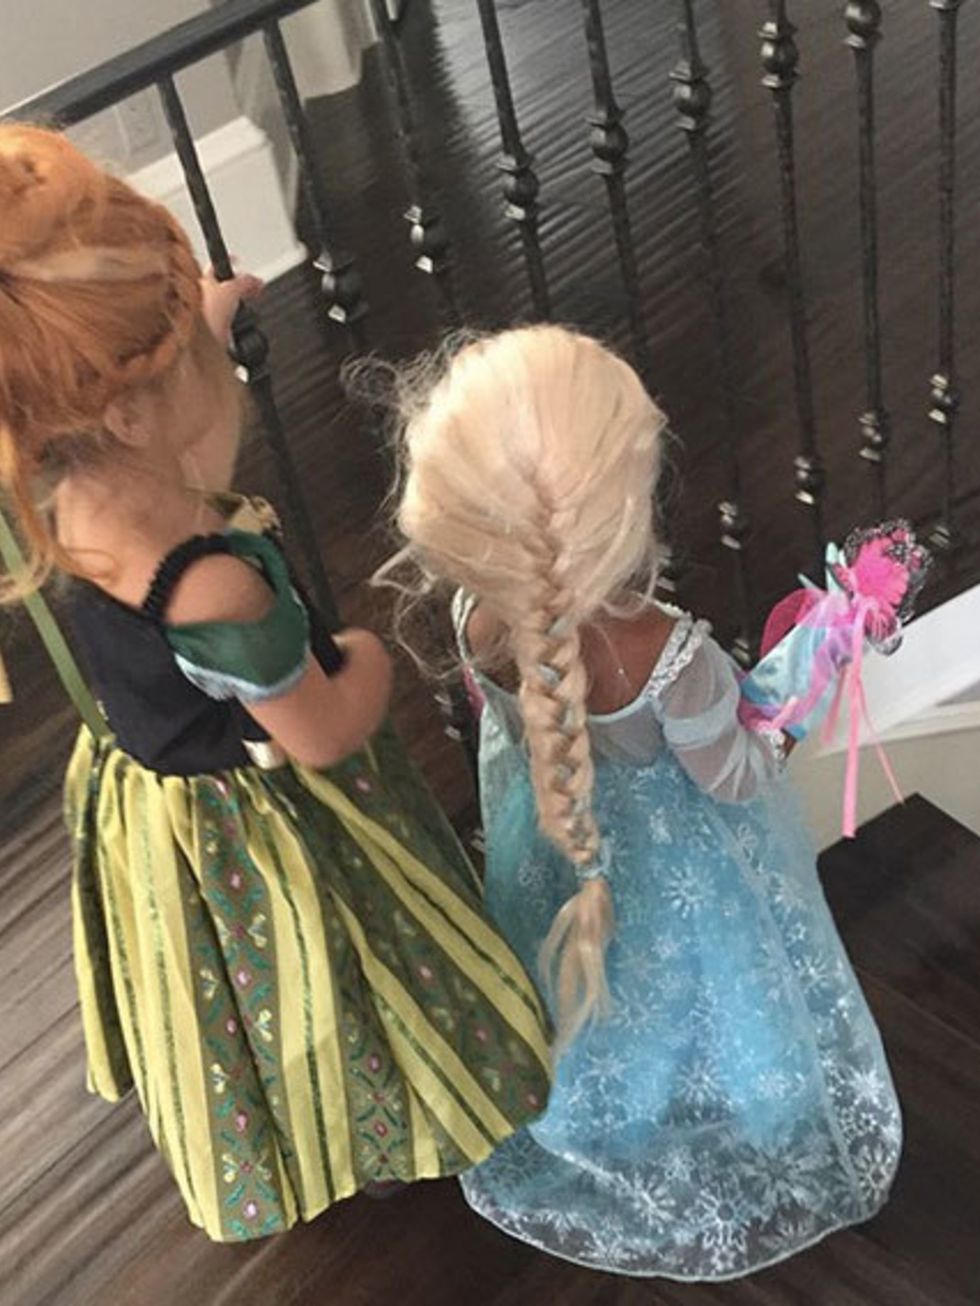 'Elsa & Anna in the house! #HalloweenVibes' @kimkardashian